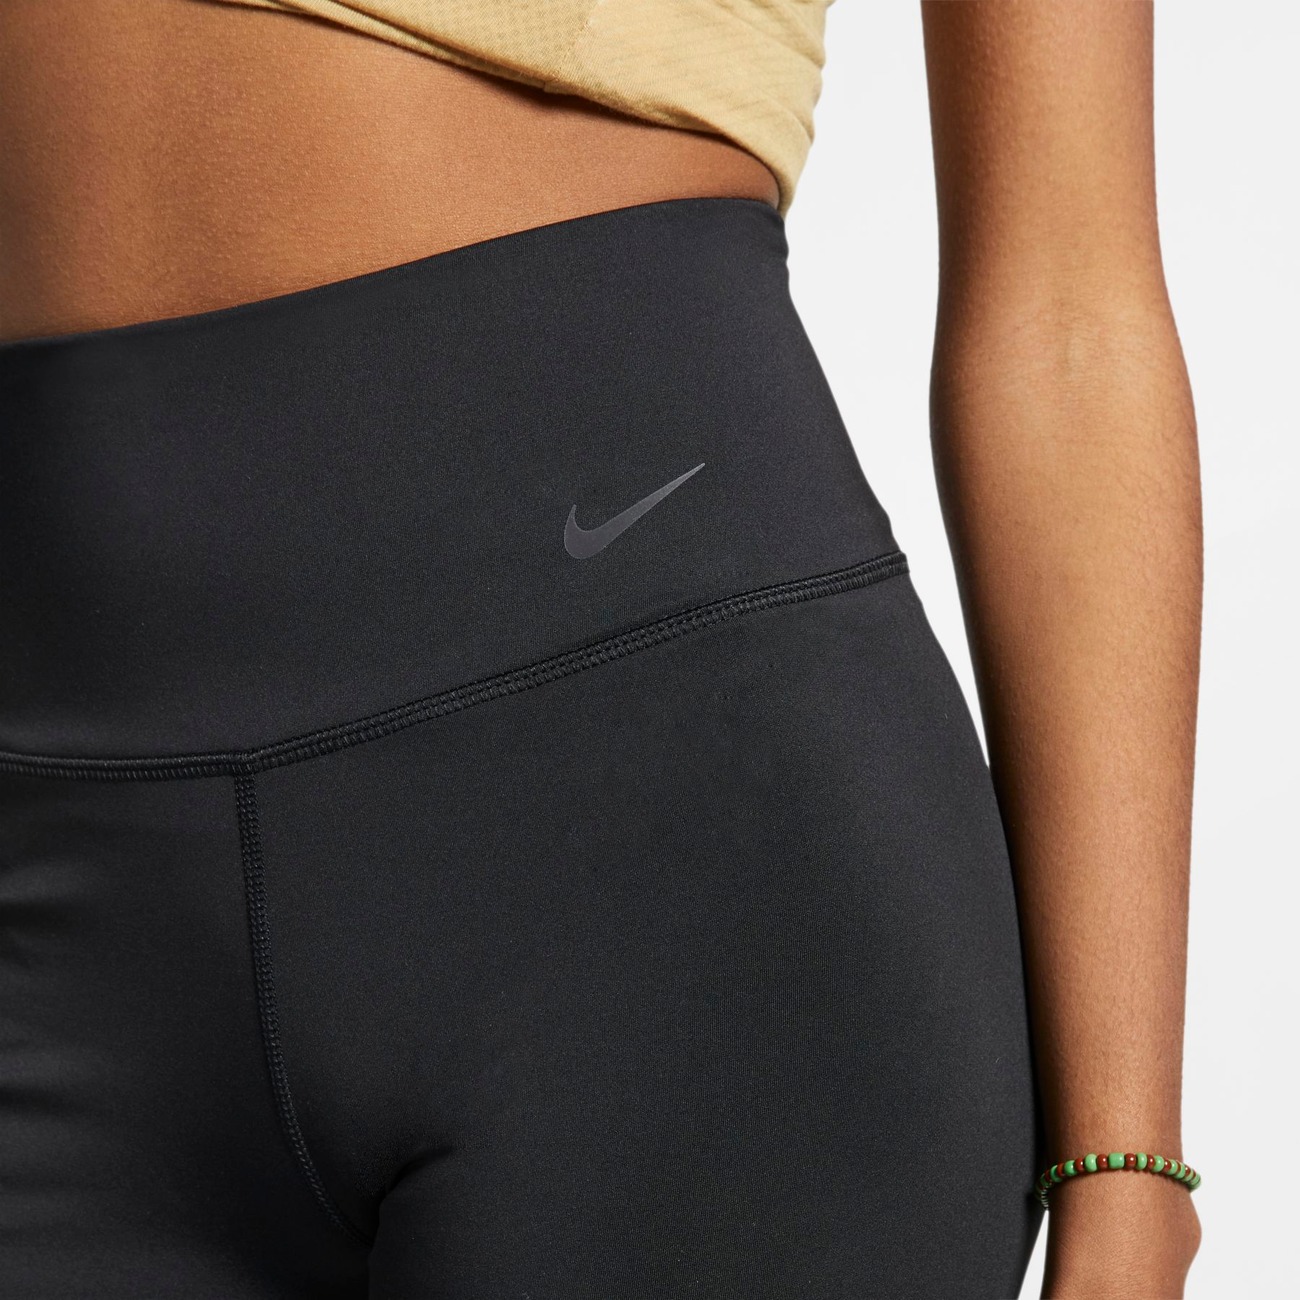 Calça Nike Power Yoga Feminina - Nike